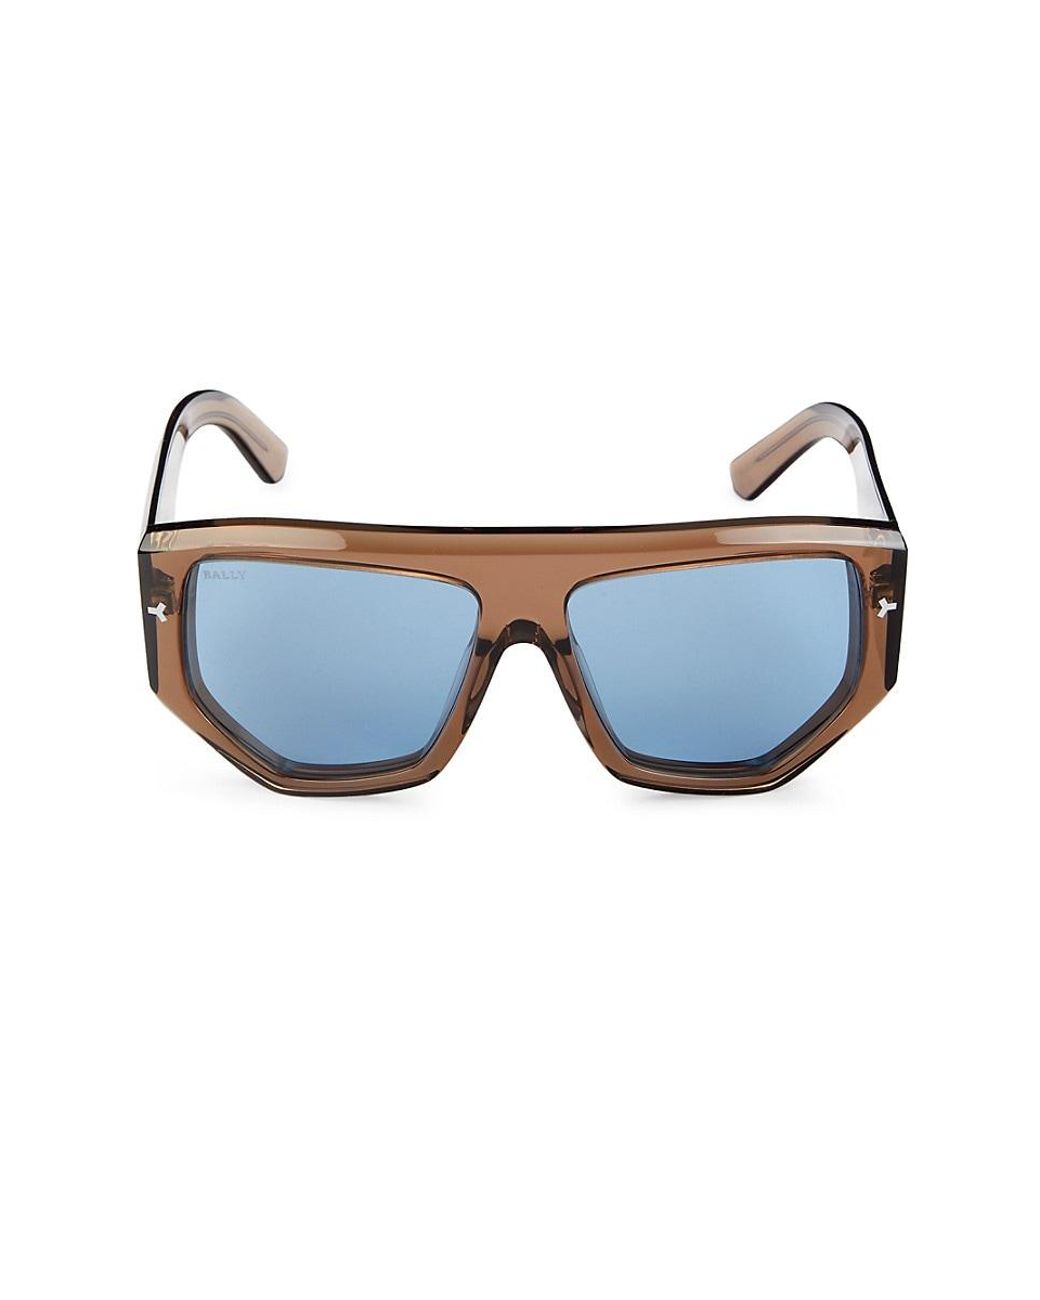 bally Beige Blue 60mm Geometric Sunglasses